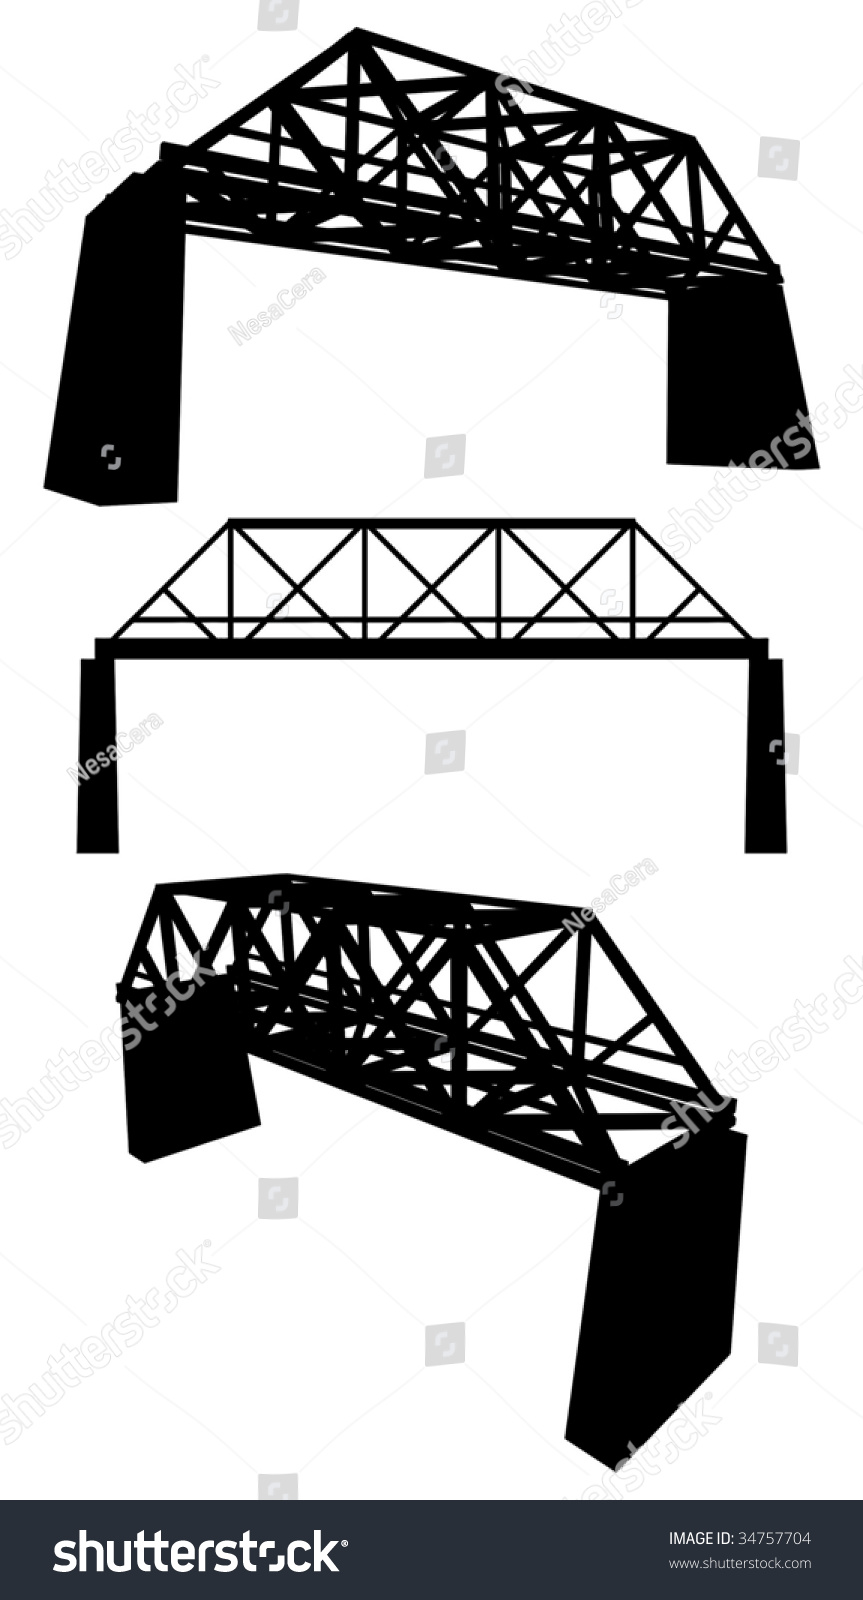 iron bridge clip art - photo #26